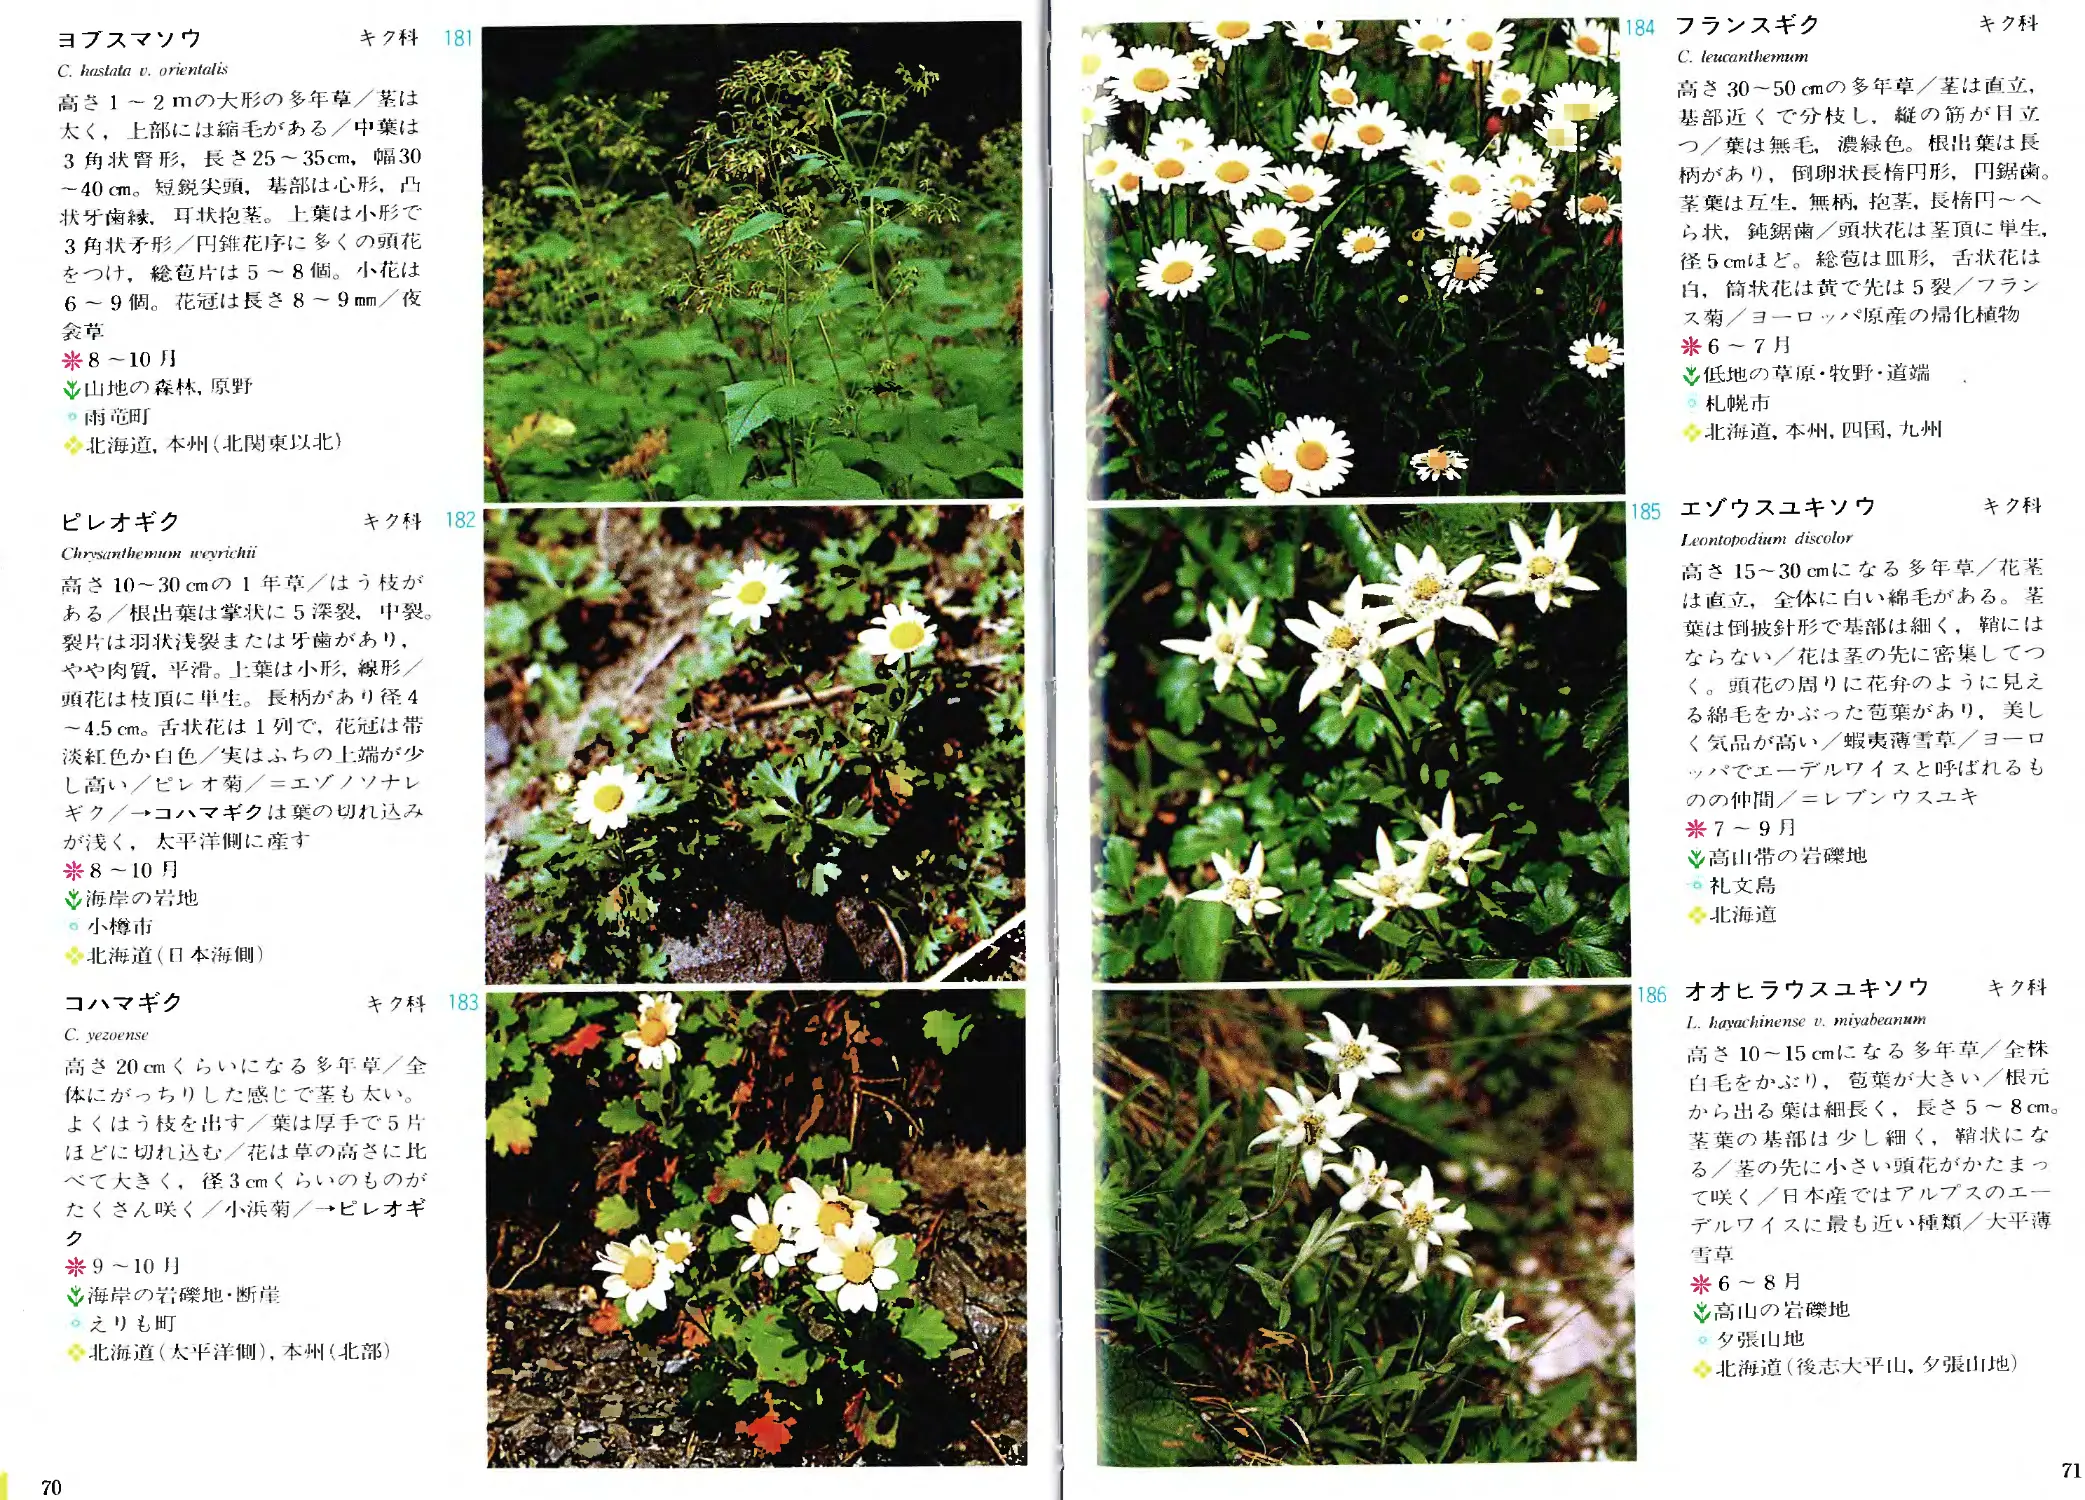 Wild Flowers Of Hokkaido